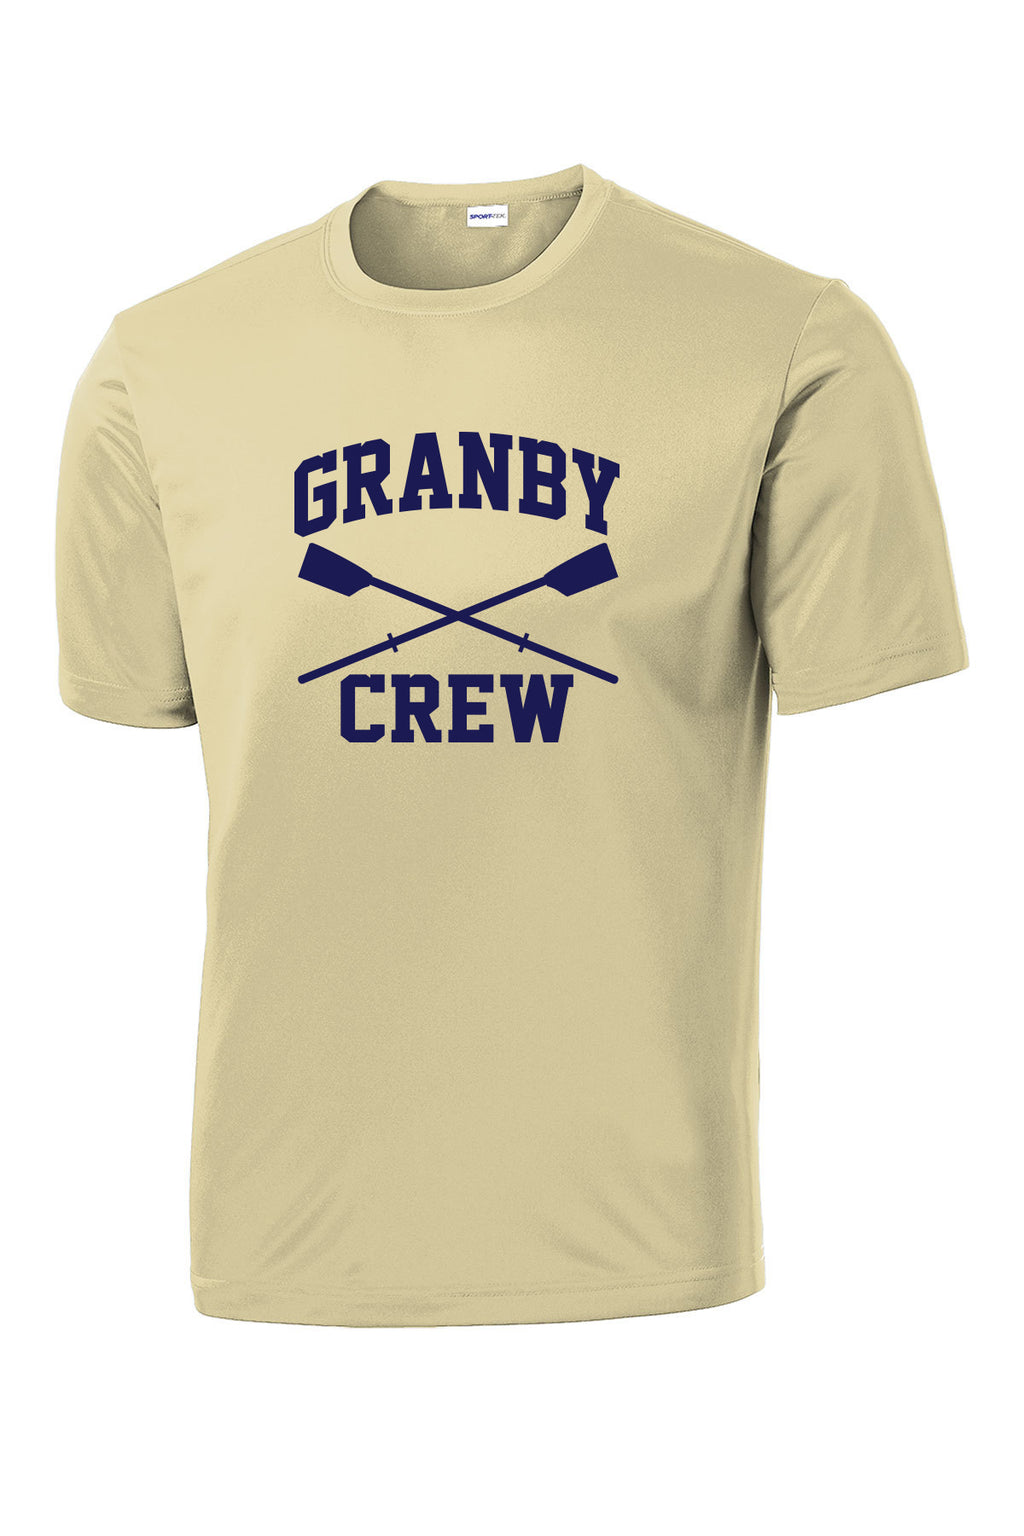 Granby Crew Men's Drytex Performance T-Shirt